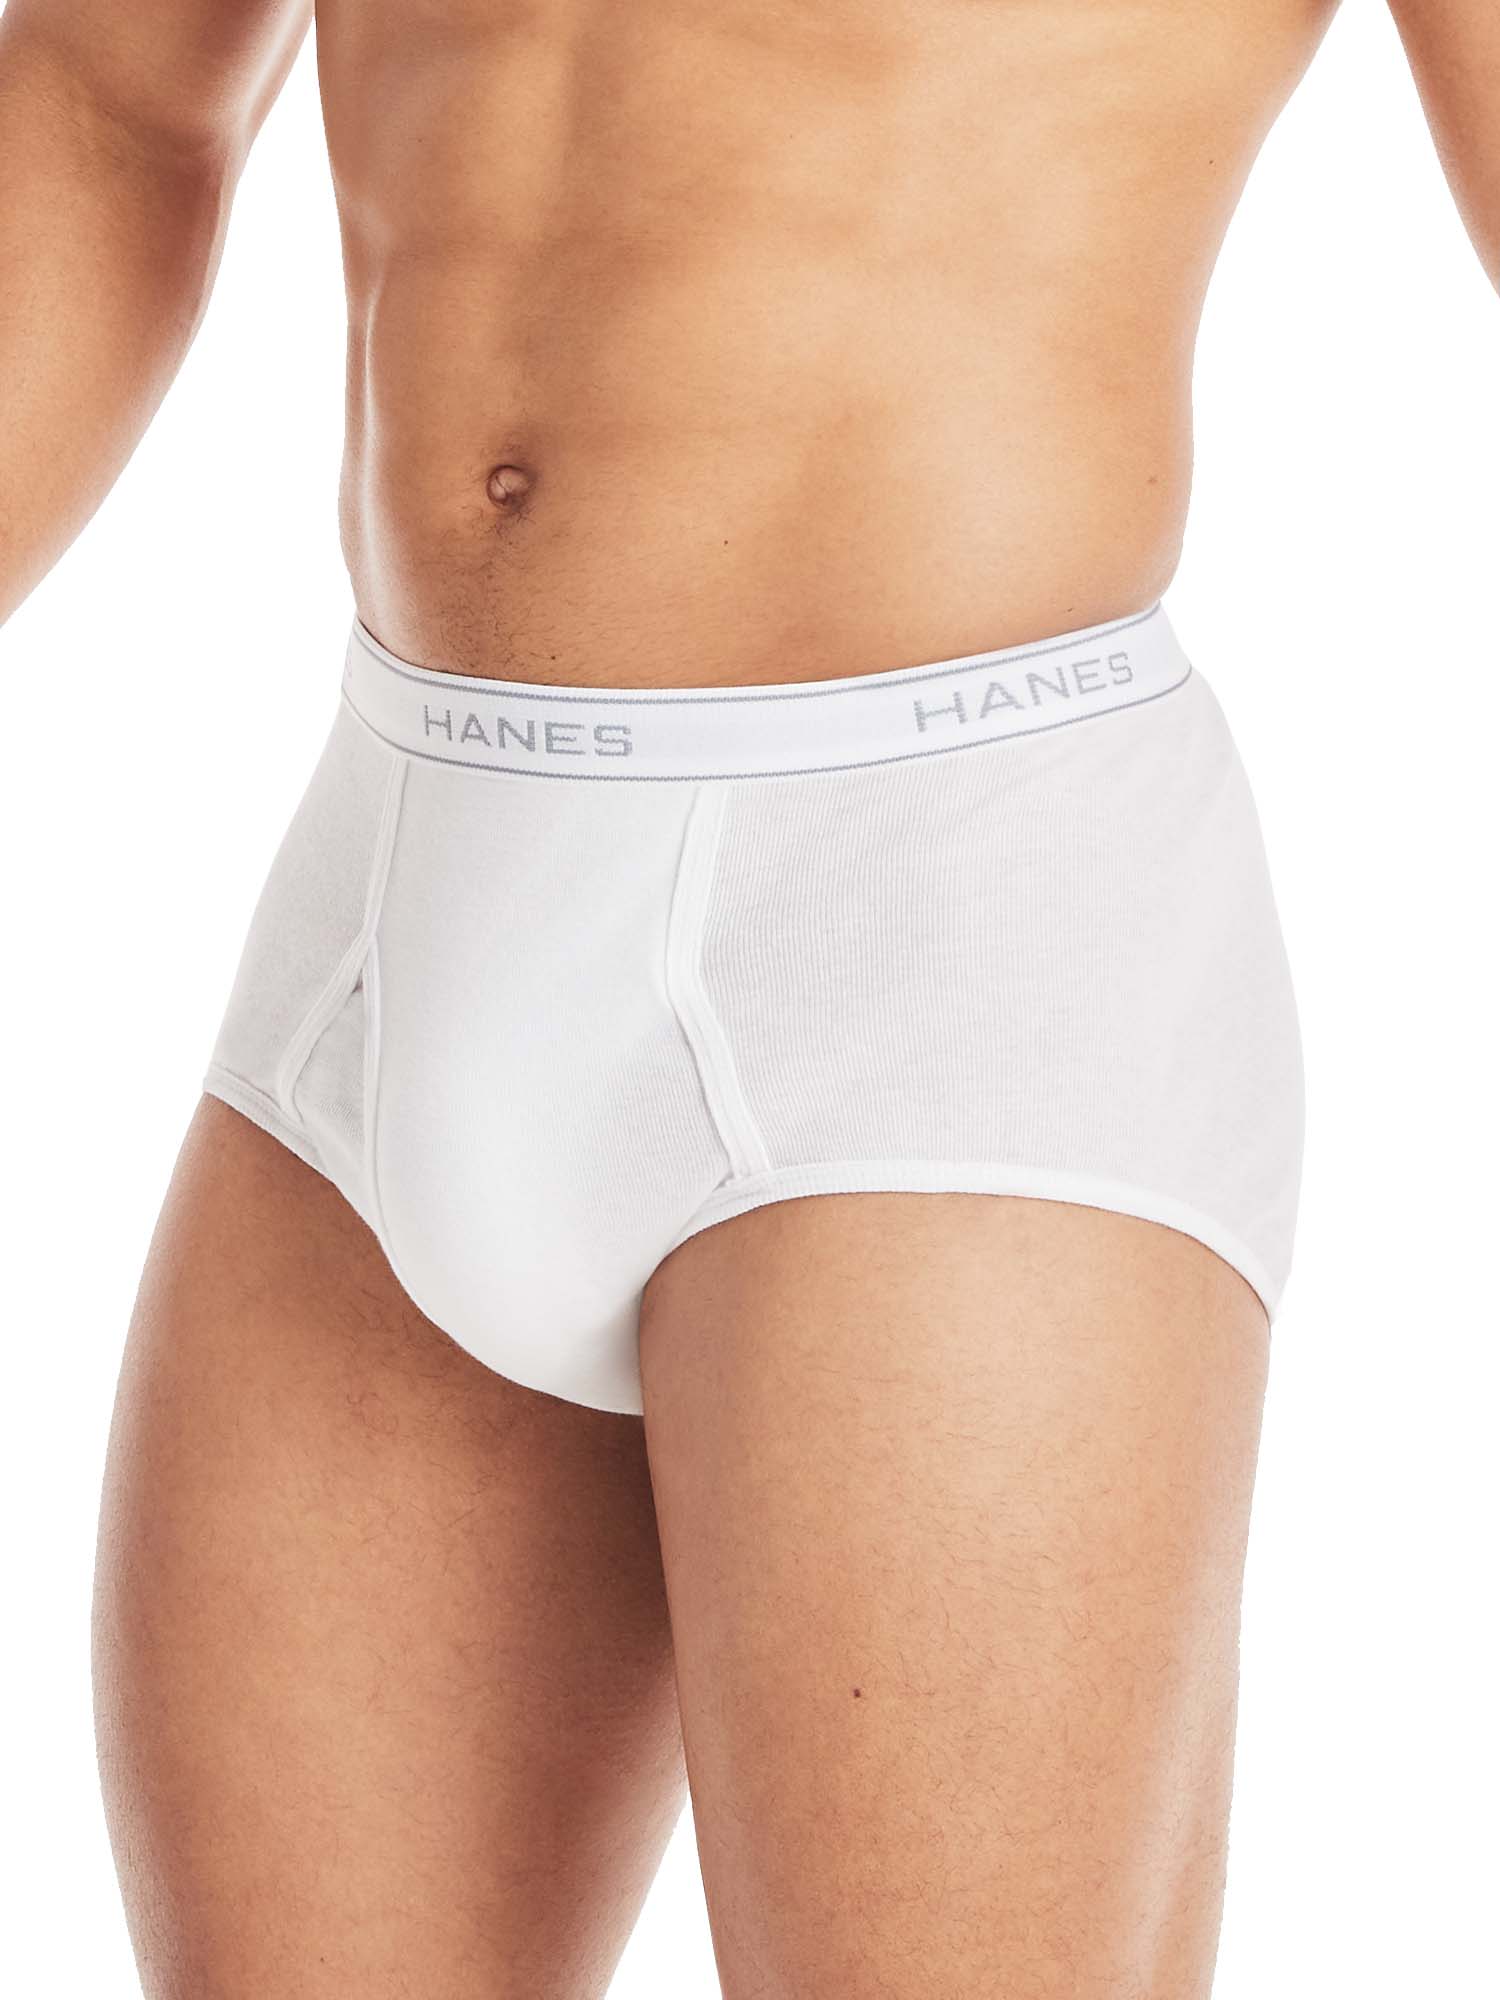 Hanes Men's Value Pack White Briefs, 6 Pack - image 5 of 9